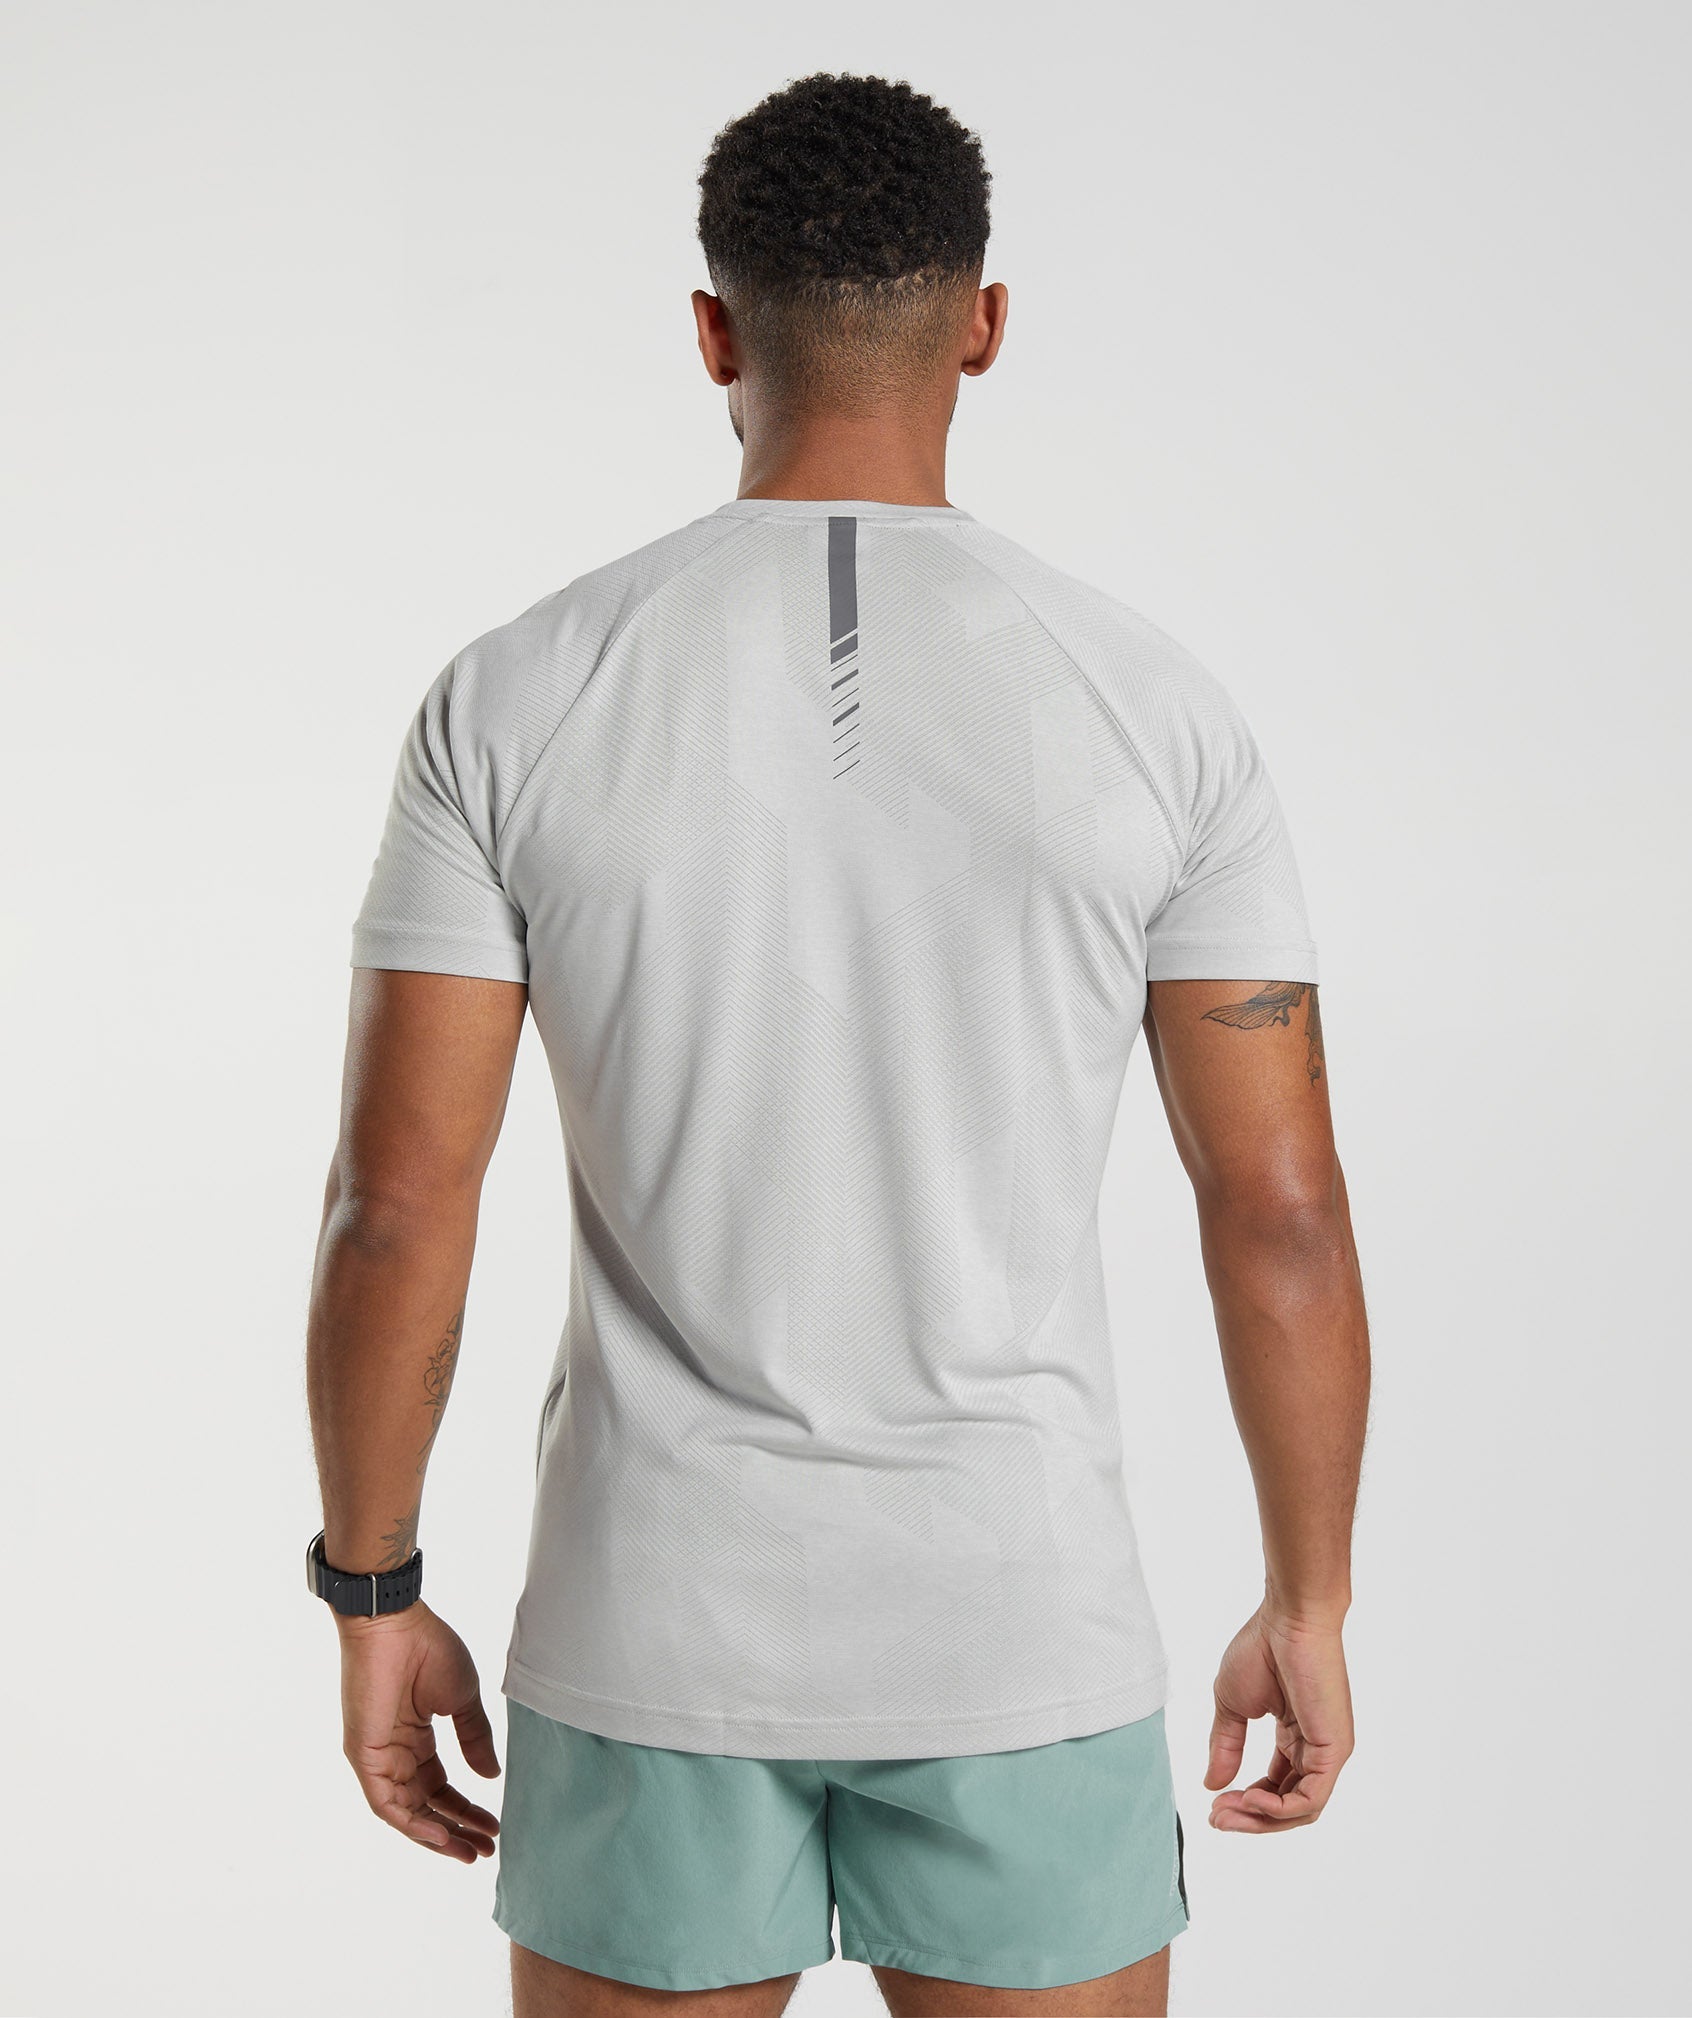 Gymshark Apex Seamless T-Shirt - Light Grey/Medium Grey